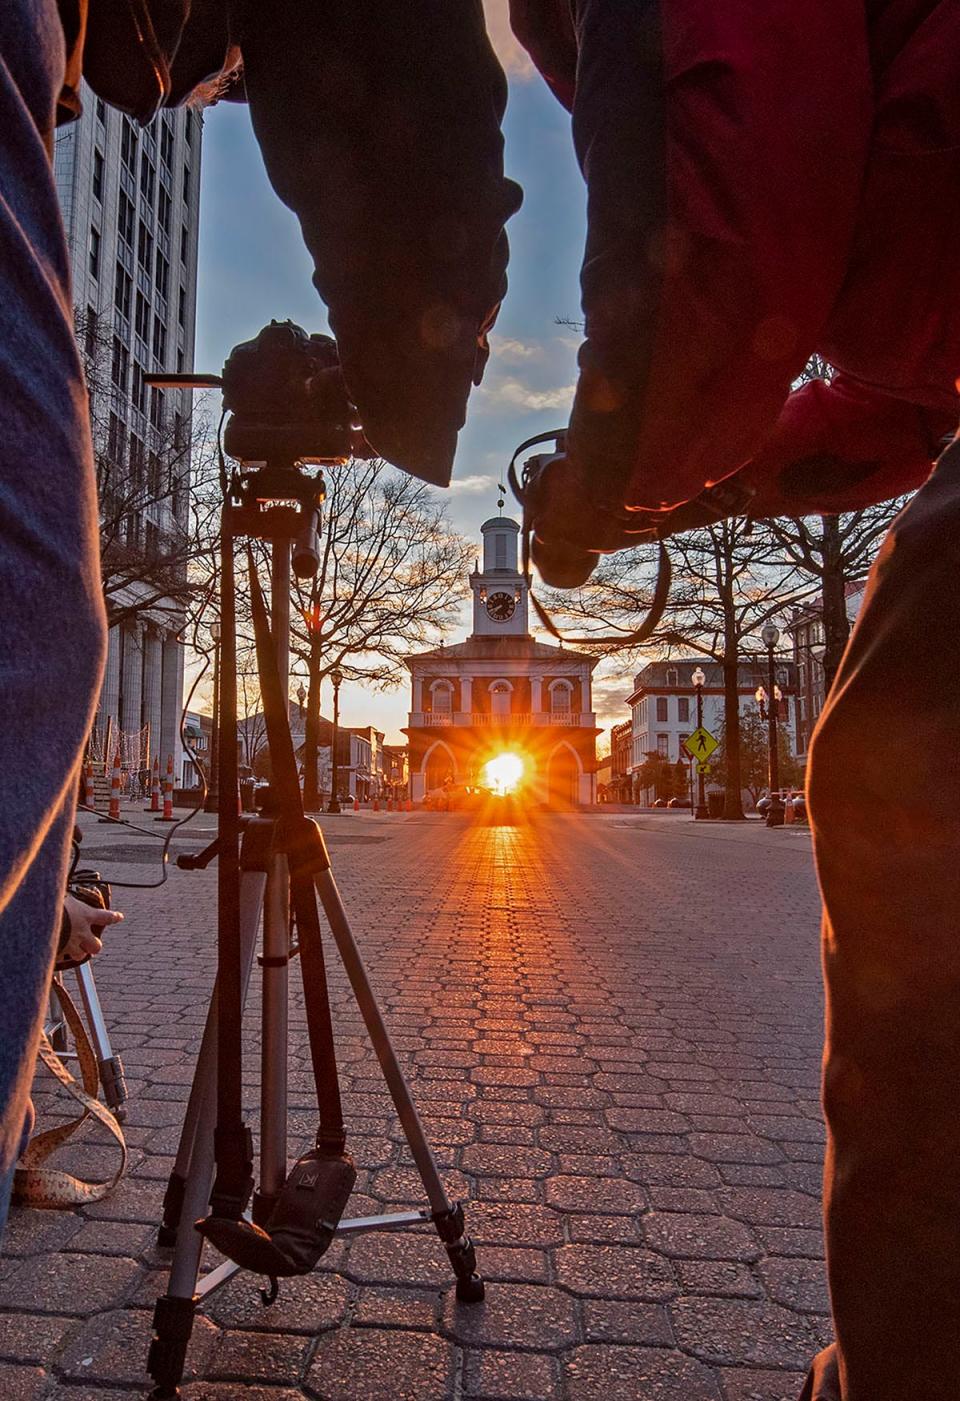 Photographers photograph the Market House sunrise on the morning of Jan. 29, 2020. The next Market House sunrise opportunity is Jan. 29, 2024.